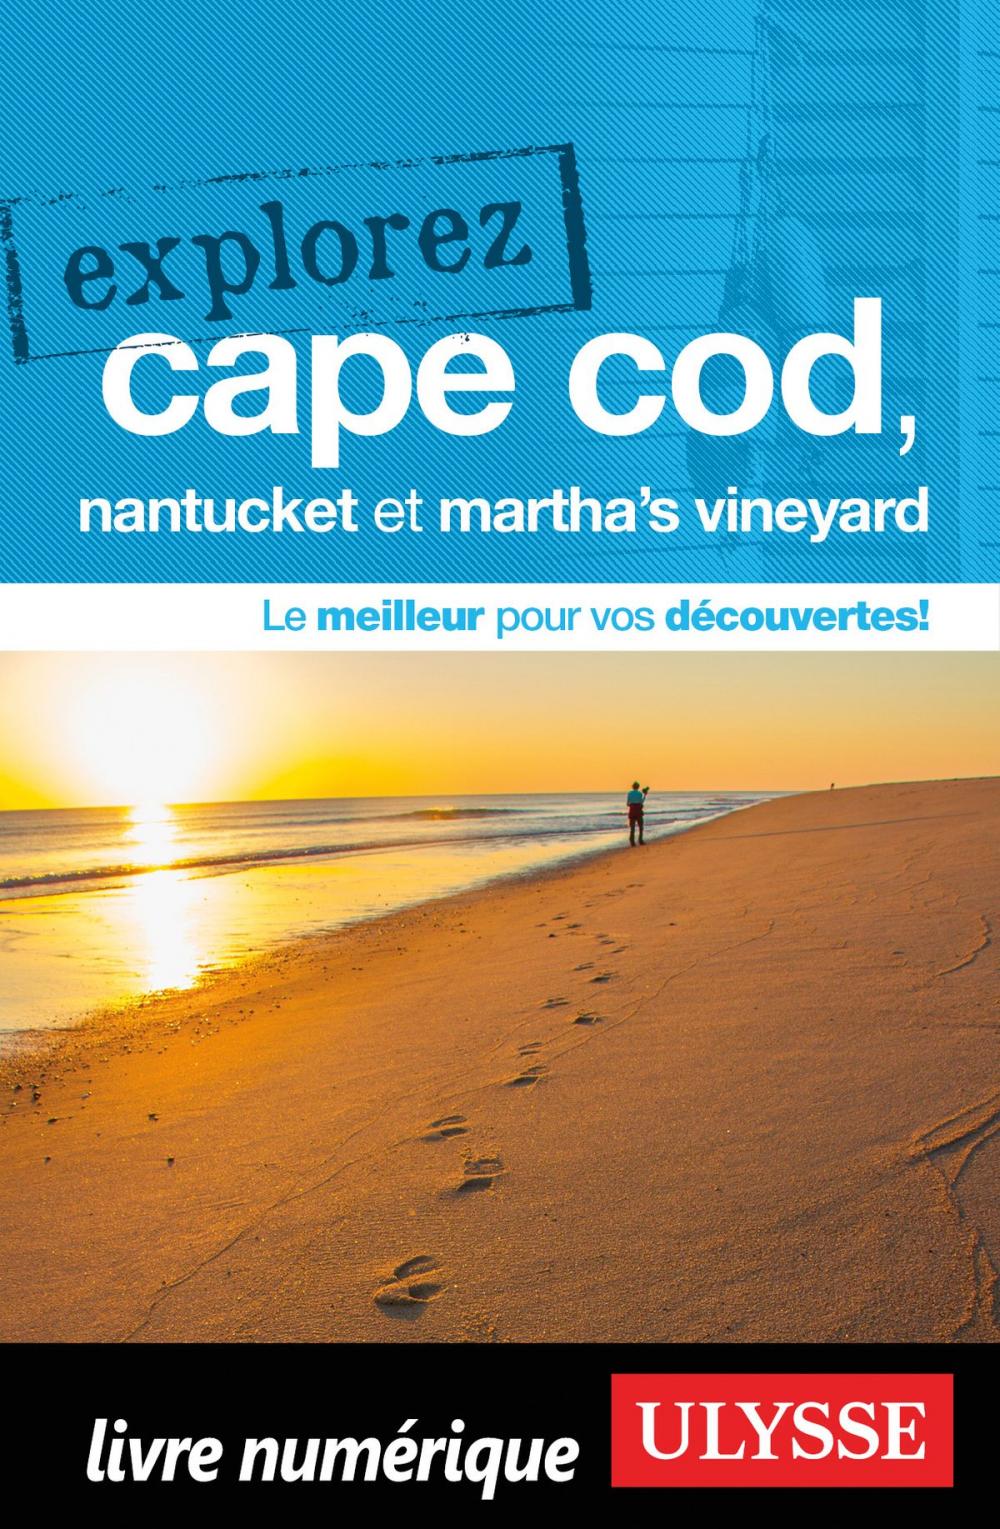 Big bigCover of Explorez Cape Cod, Nantucket et Martha's Vineyard